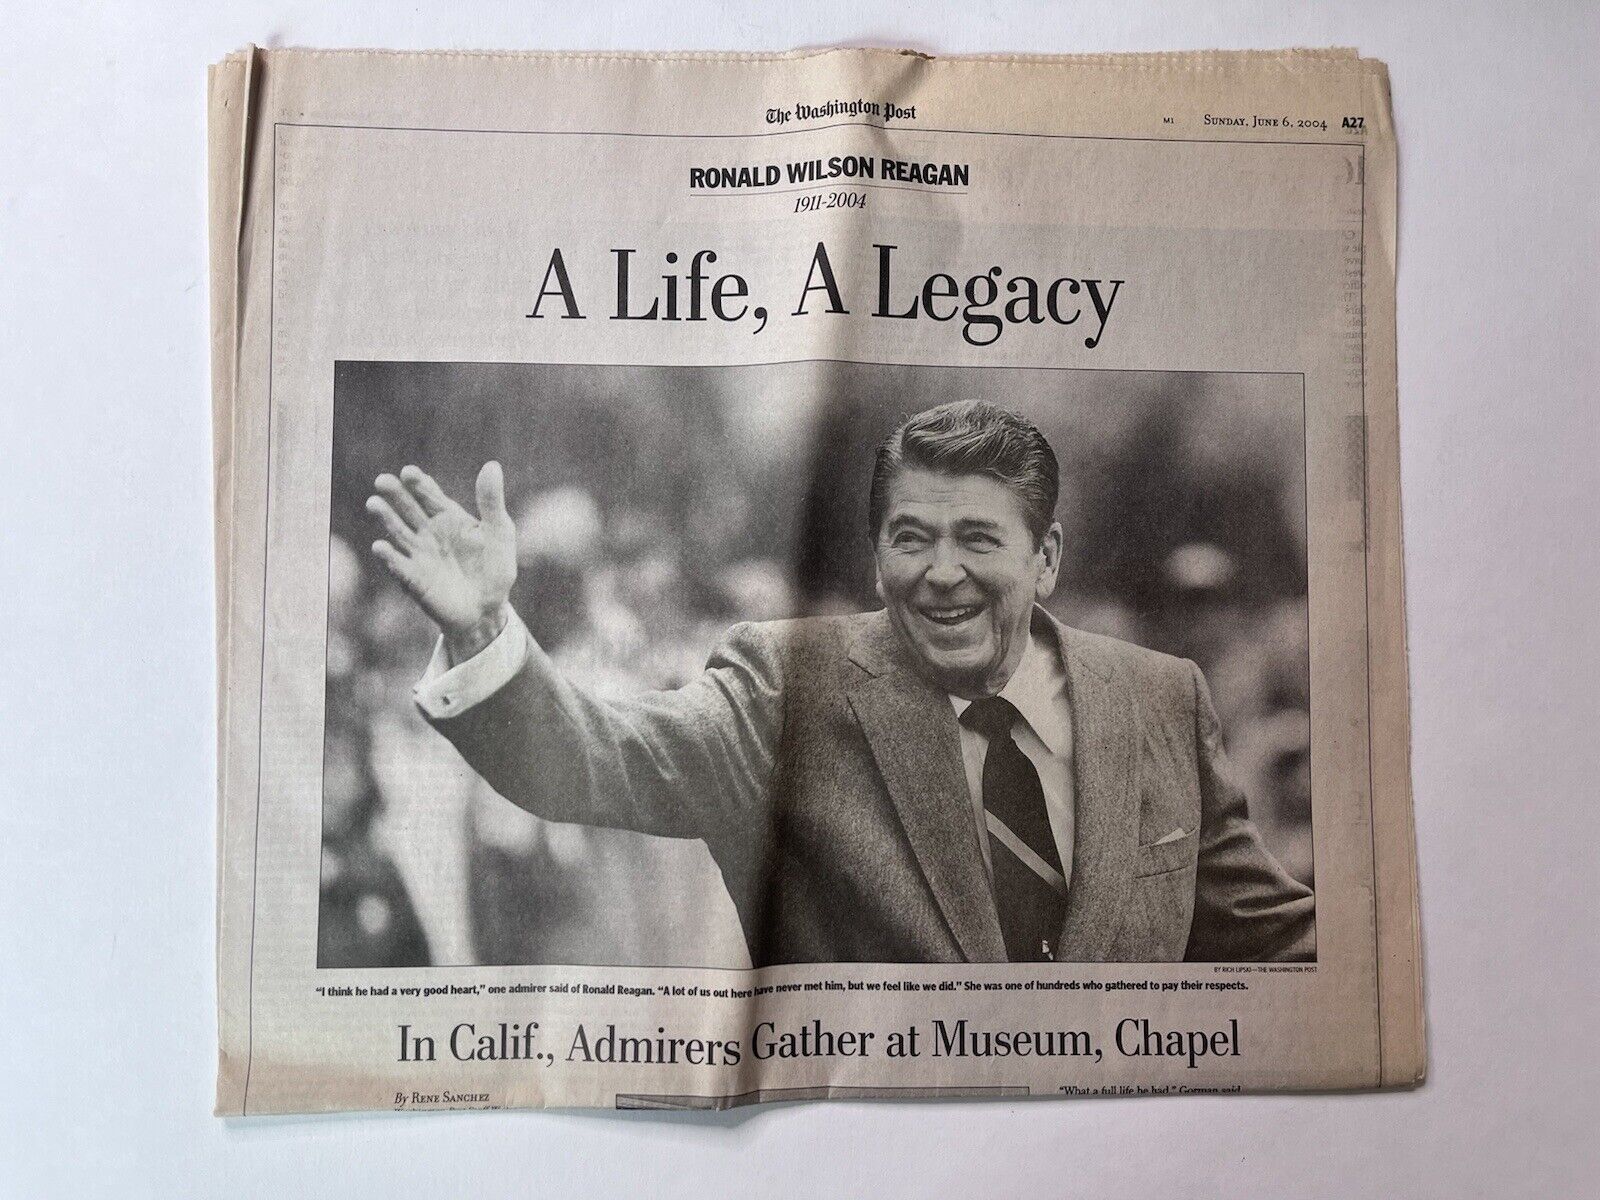 The Washington Post June 6 2004 Ronald Reagan A Life, A Legacy 